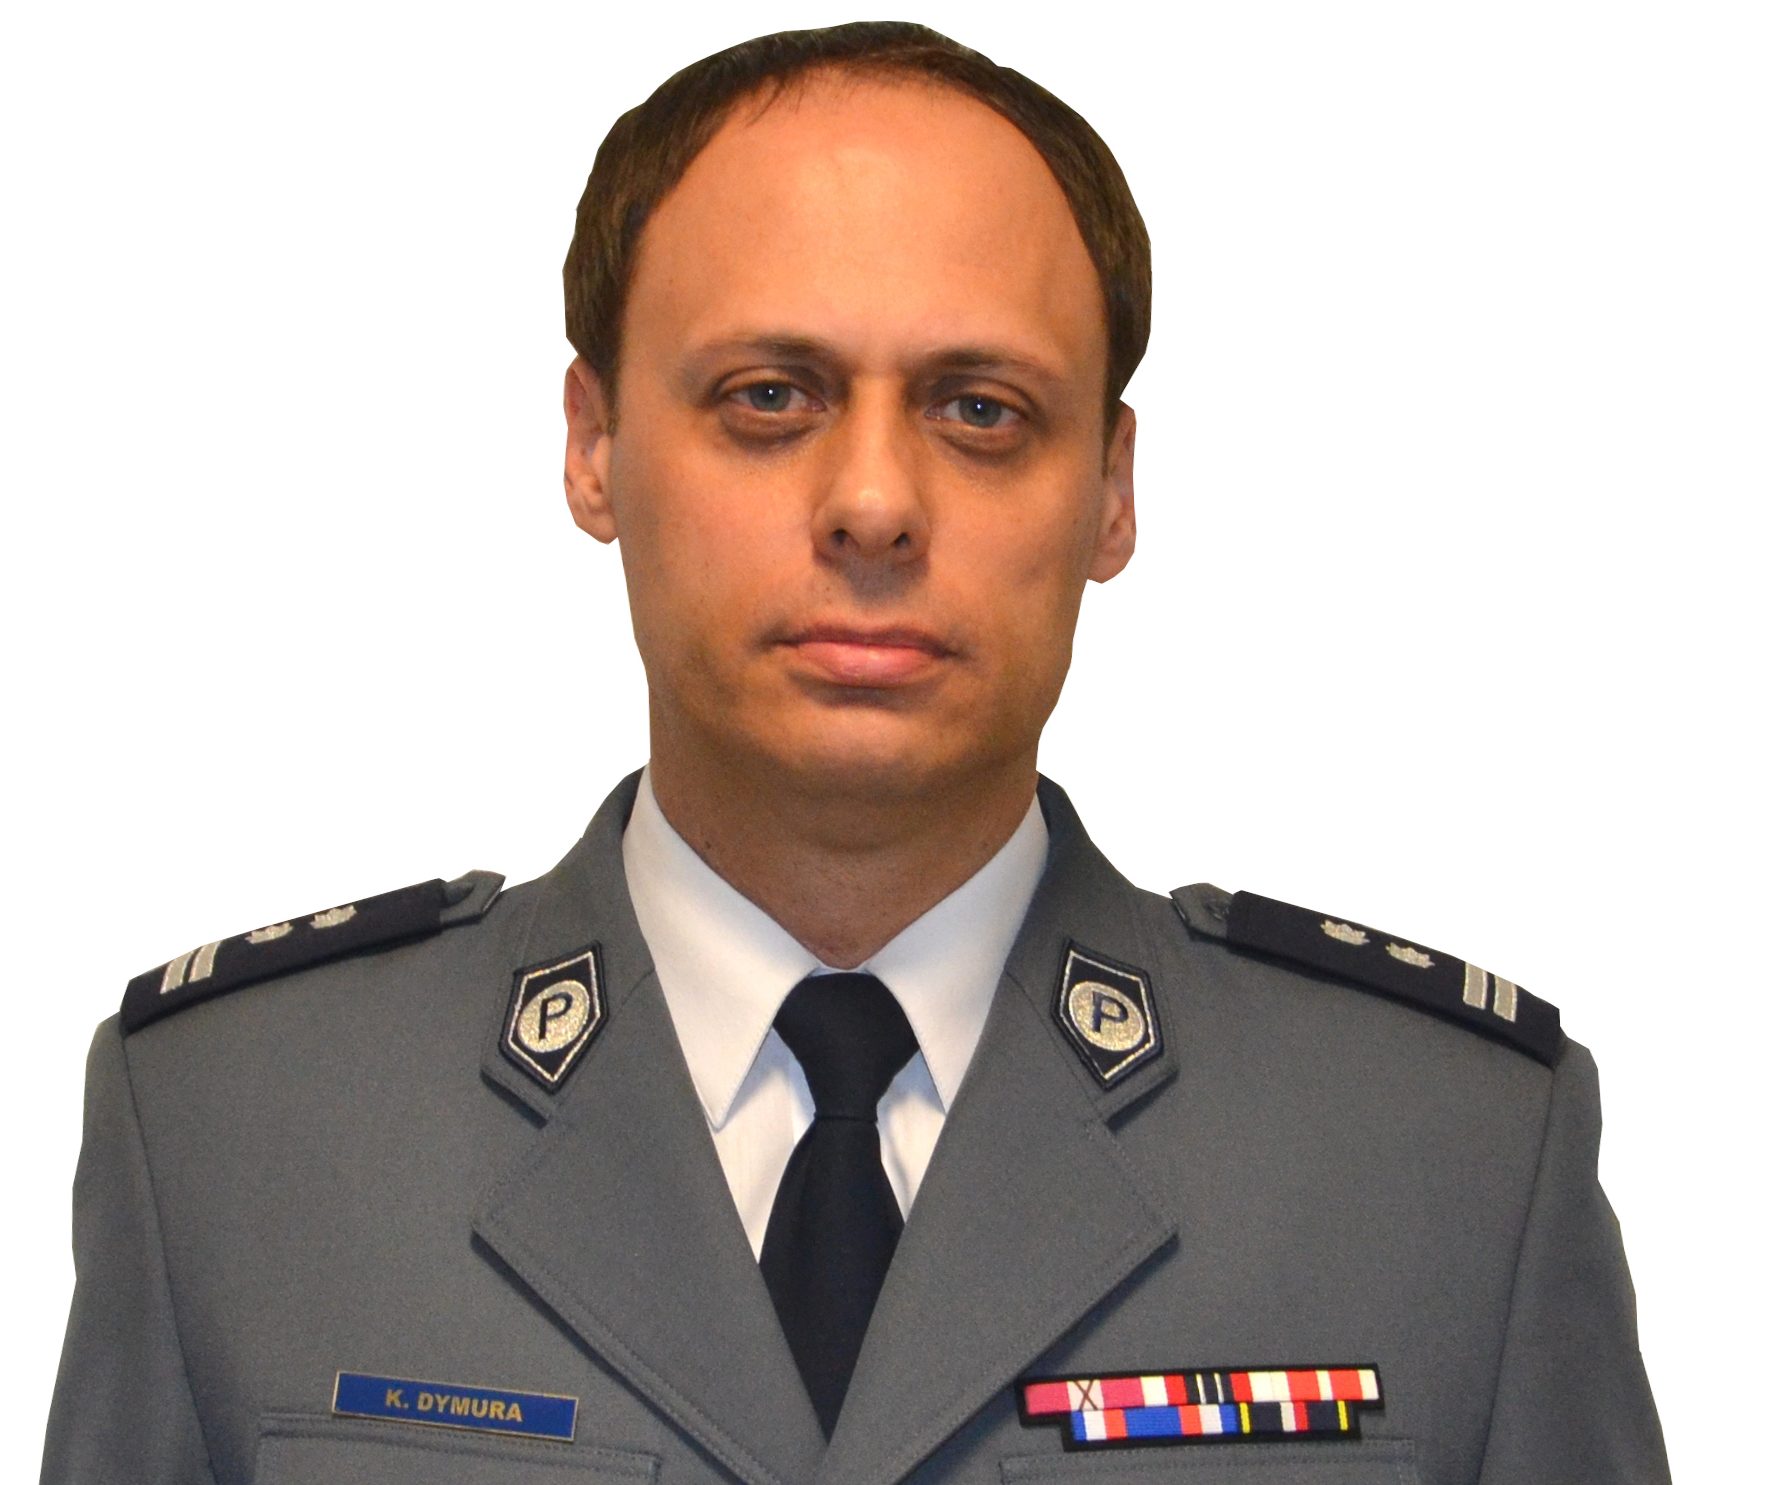 Komendant Krzysztof Dymura